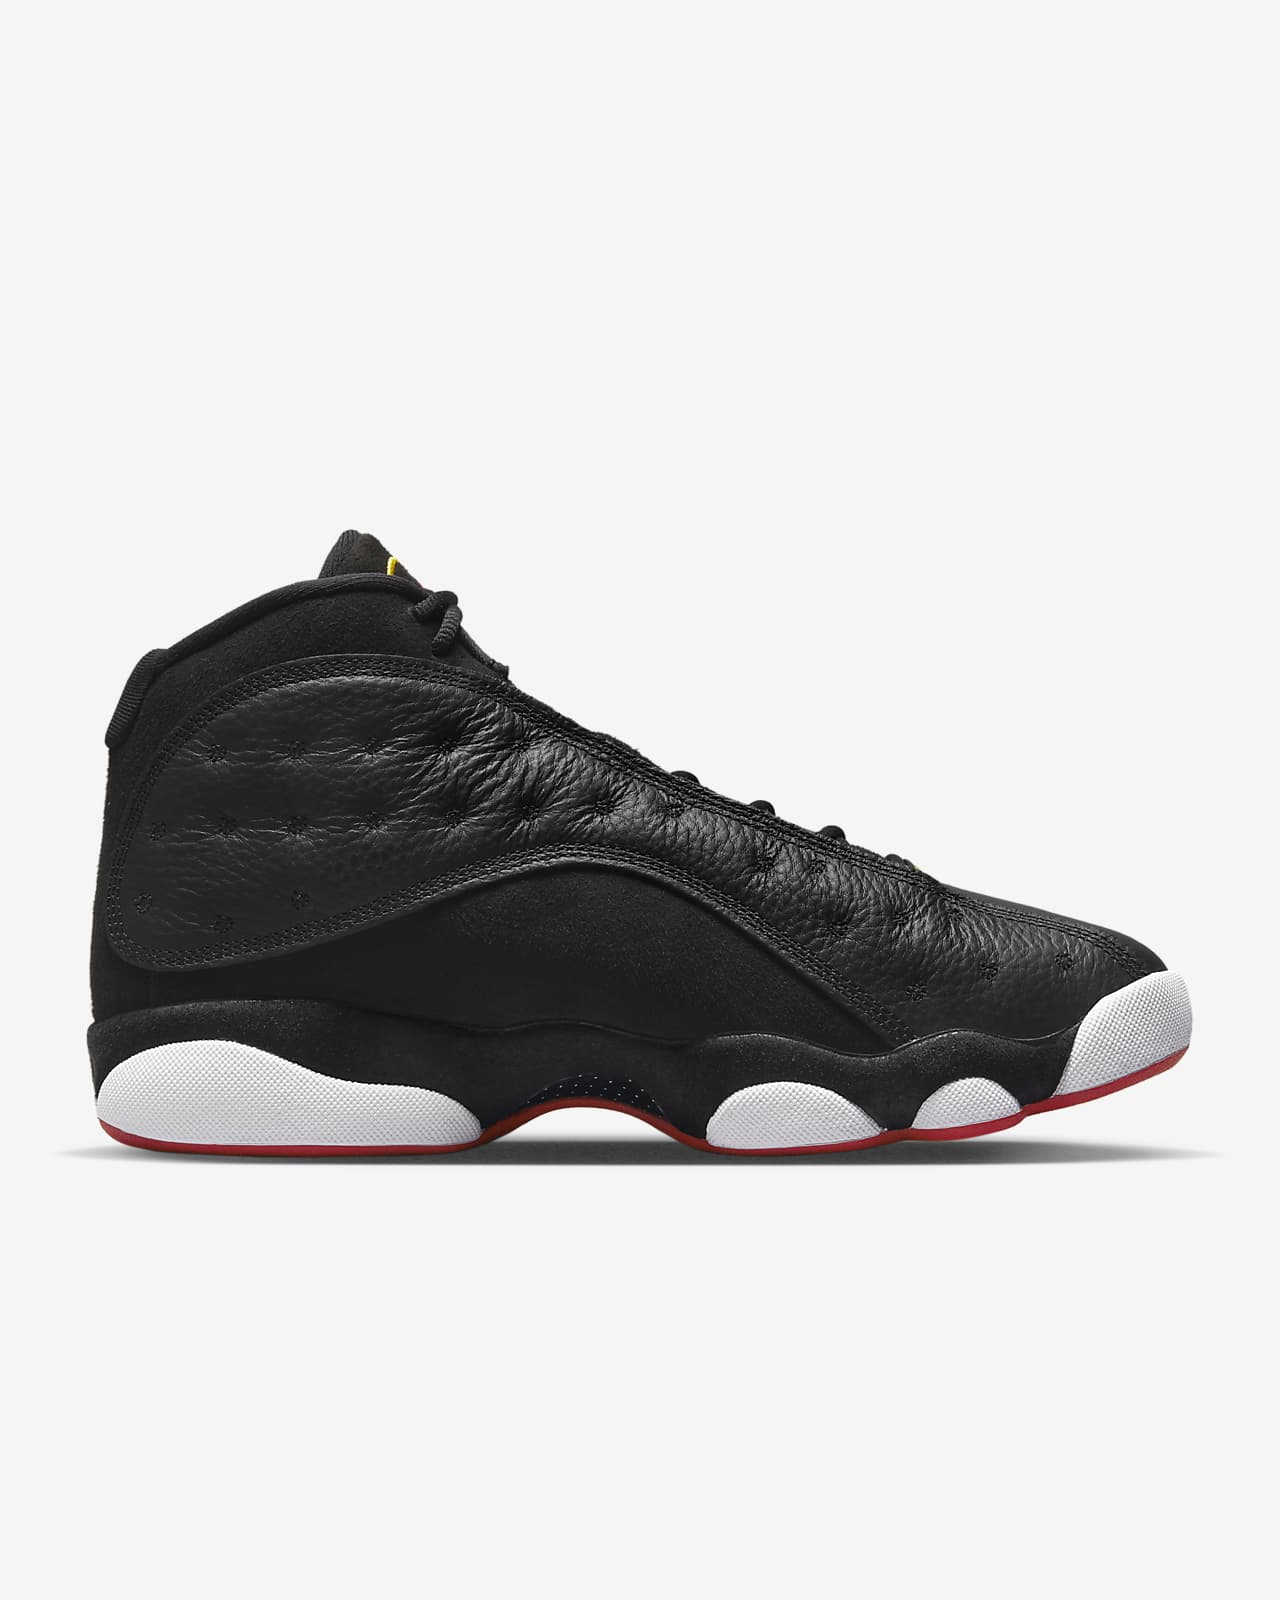 Jordan 13 Shoe. Nike.com